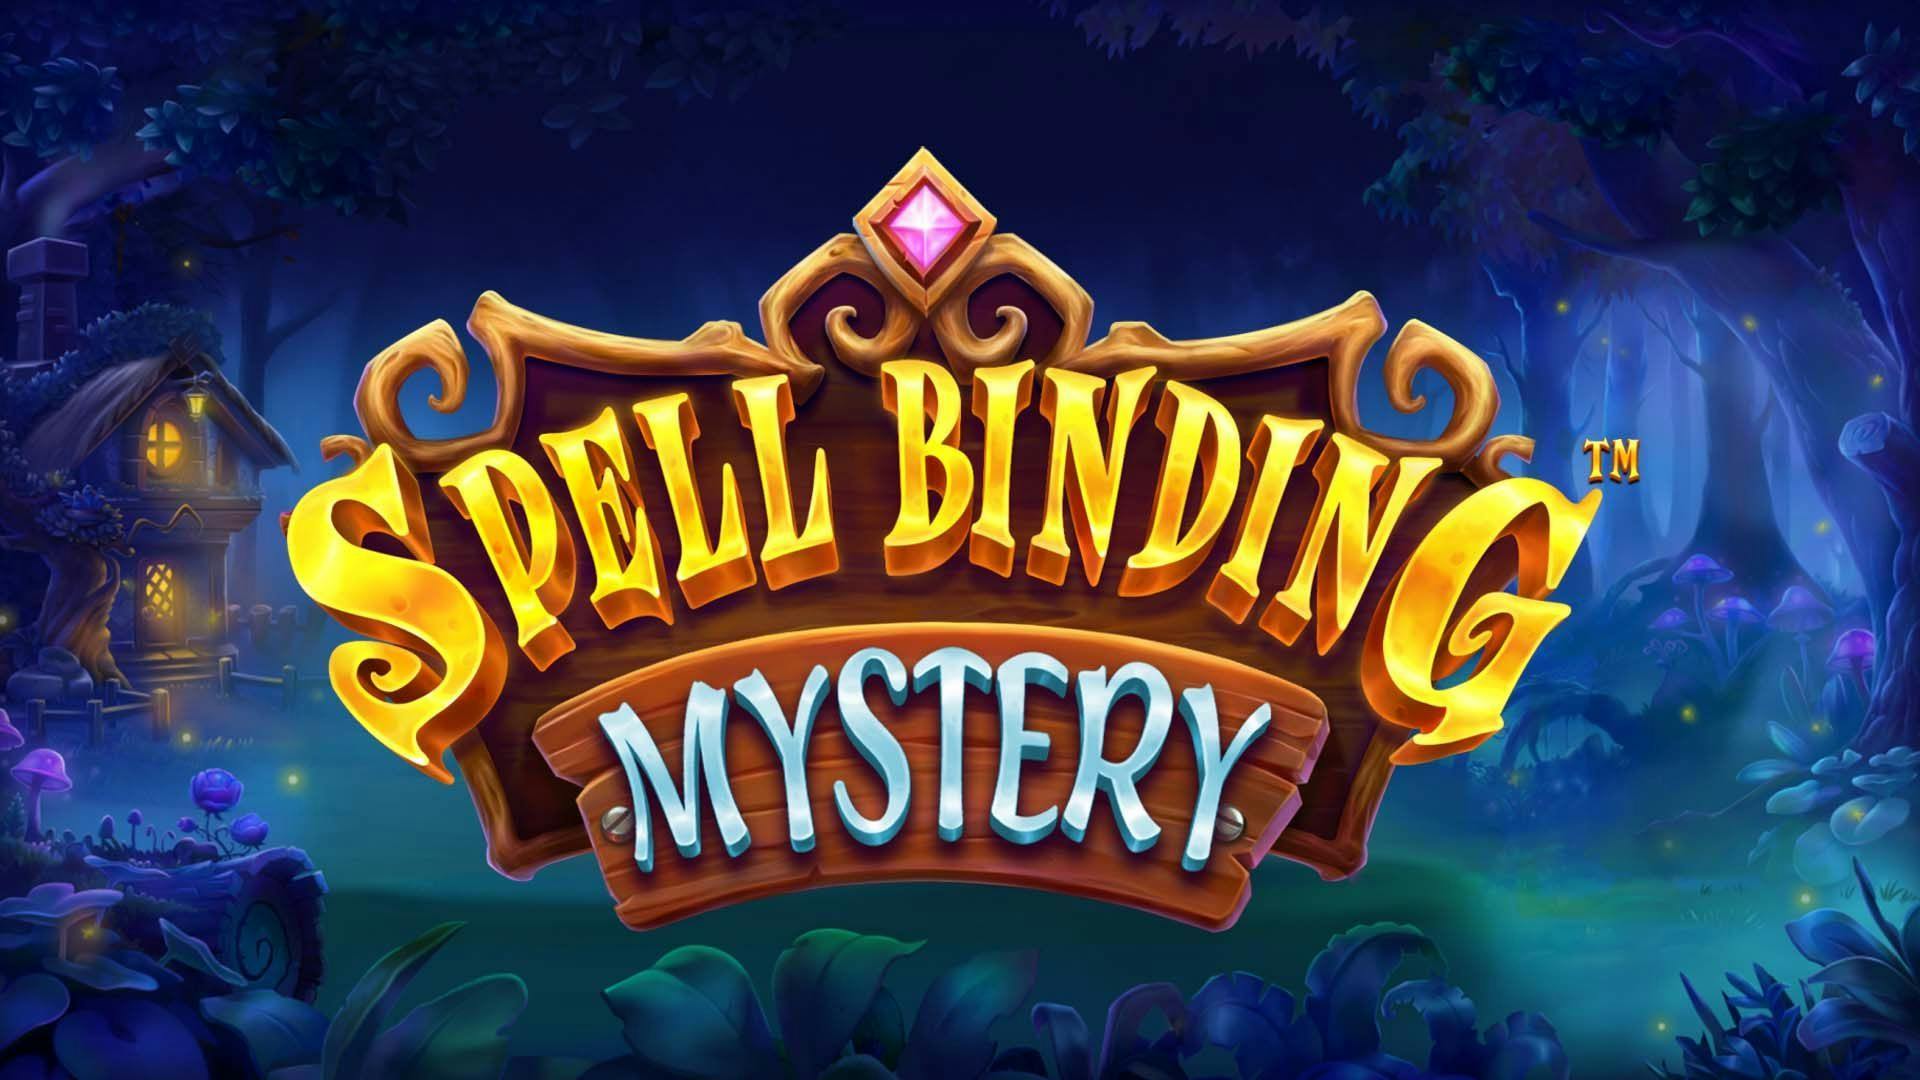 Spellbinding Mystery Slot Machine Online Free Game Play